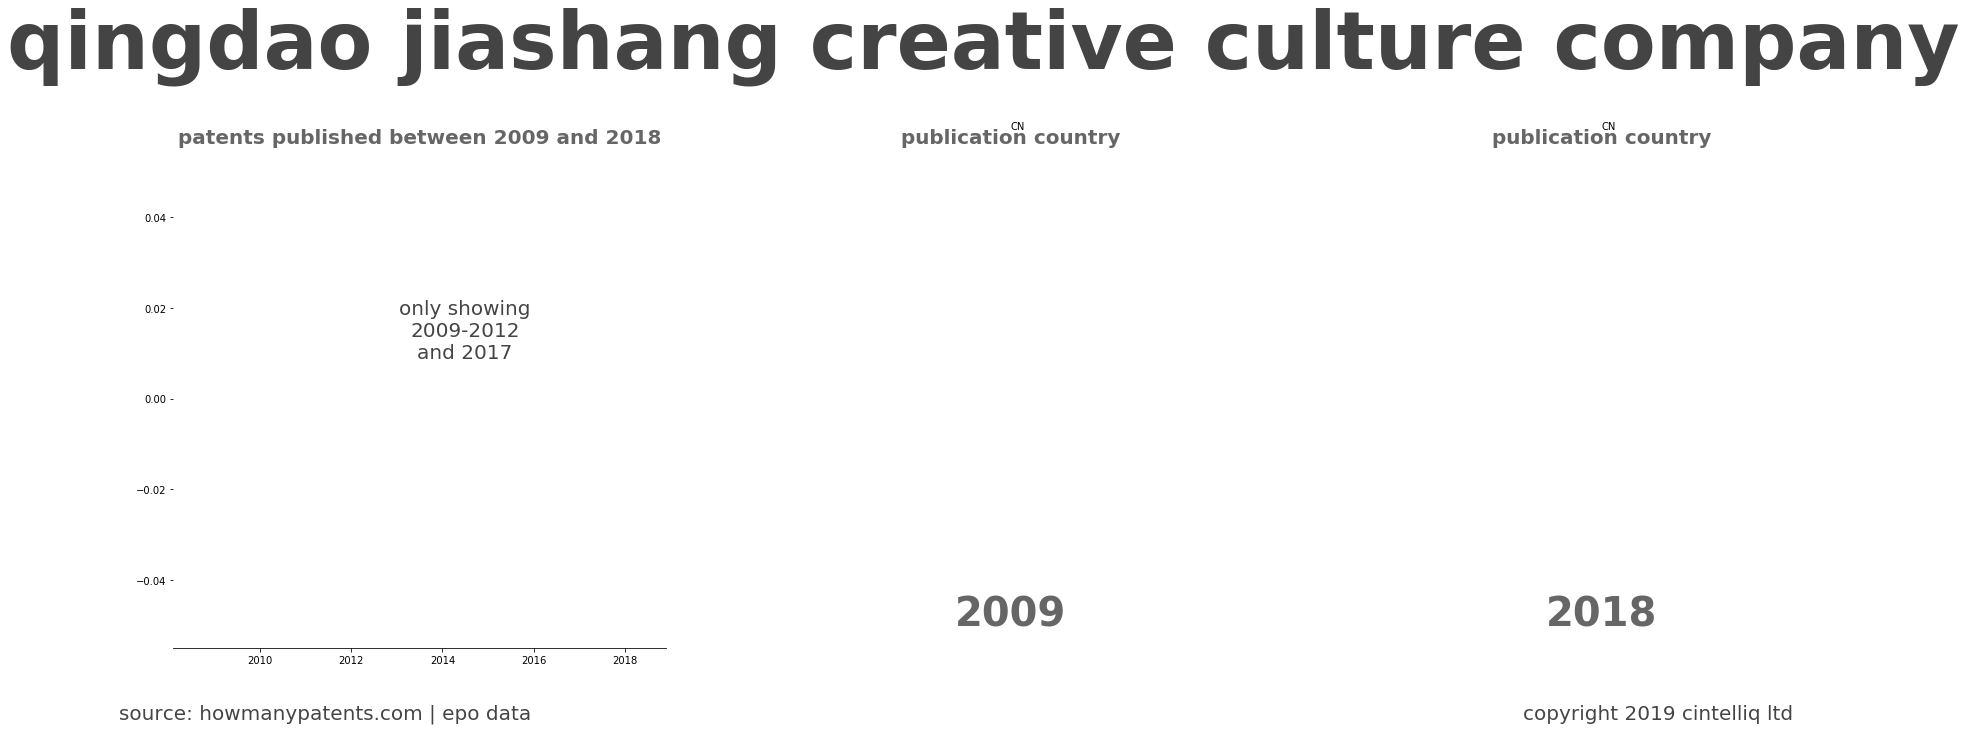 summary of patents for Qingdao Jiashang Creative Culture Company